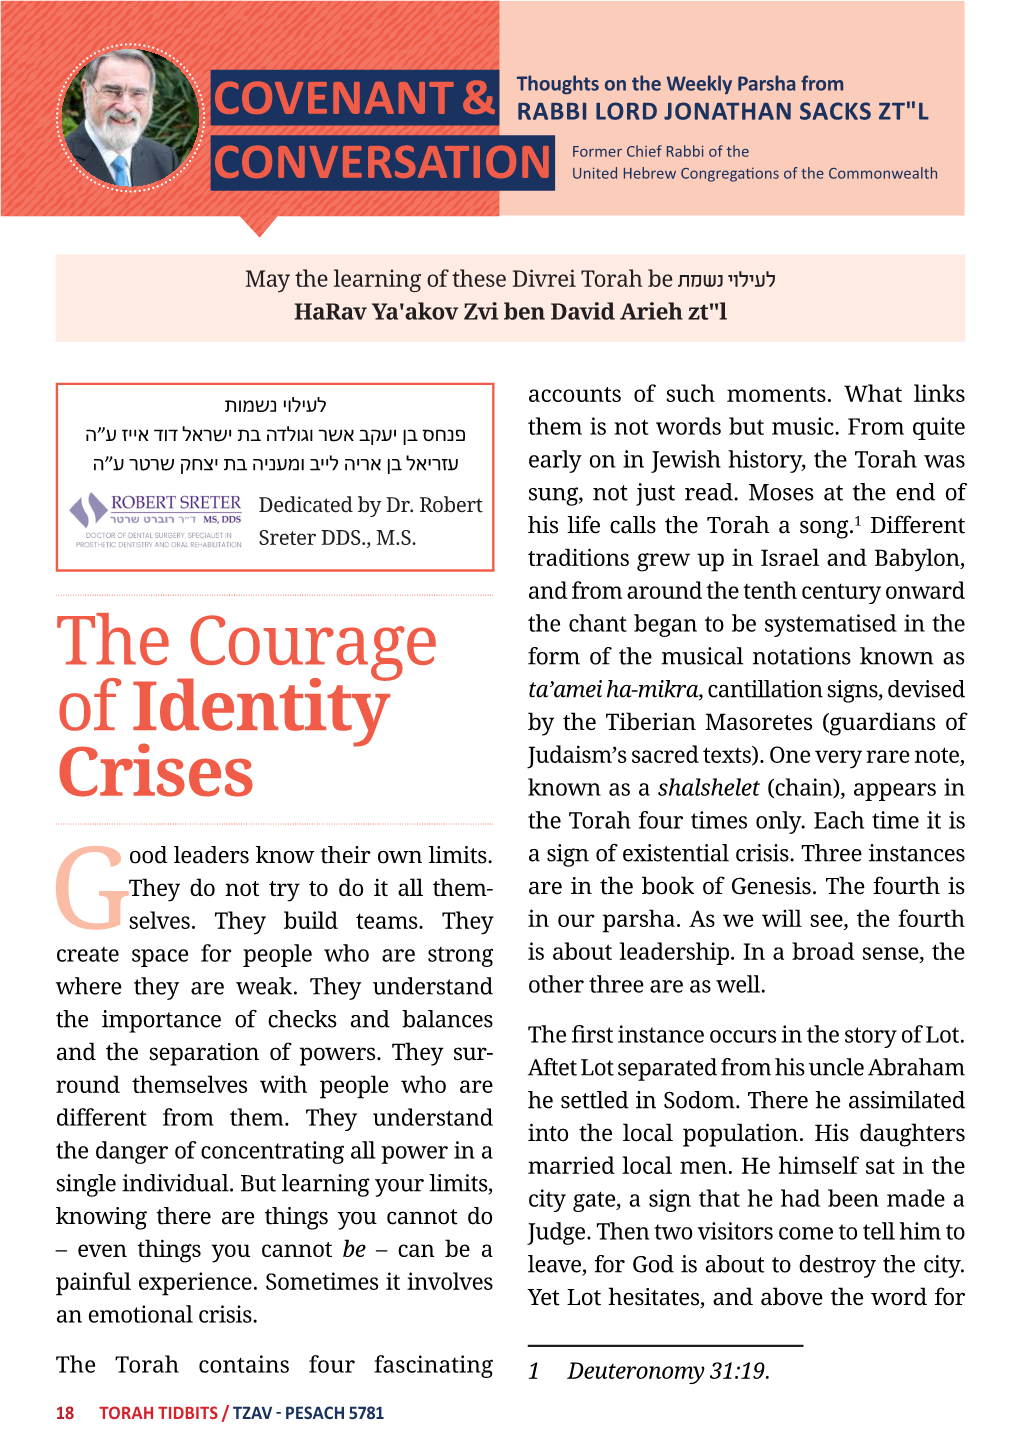 The Courage of Identity Crises